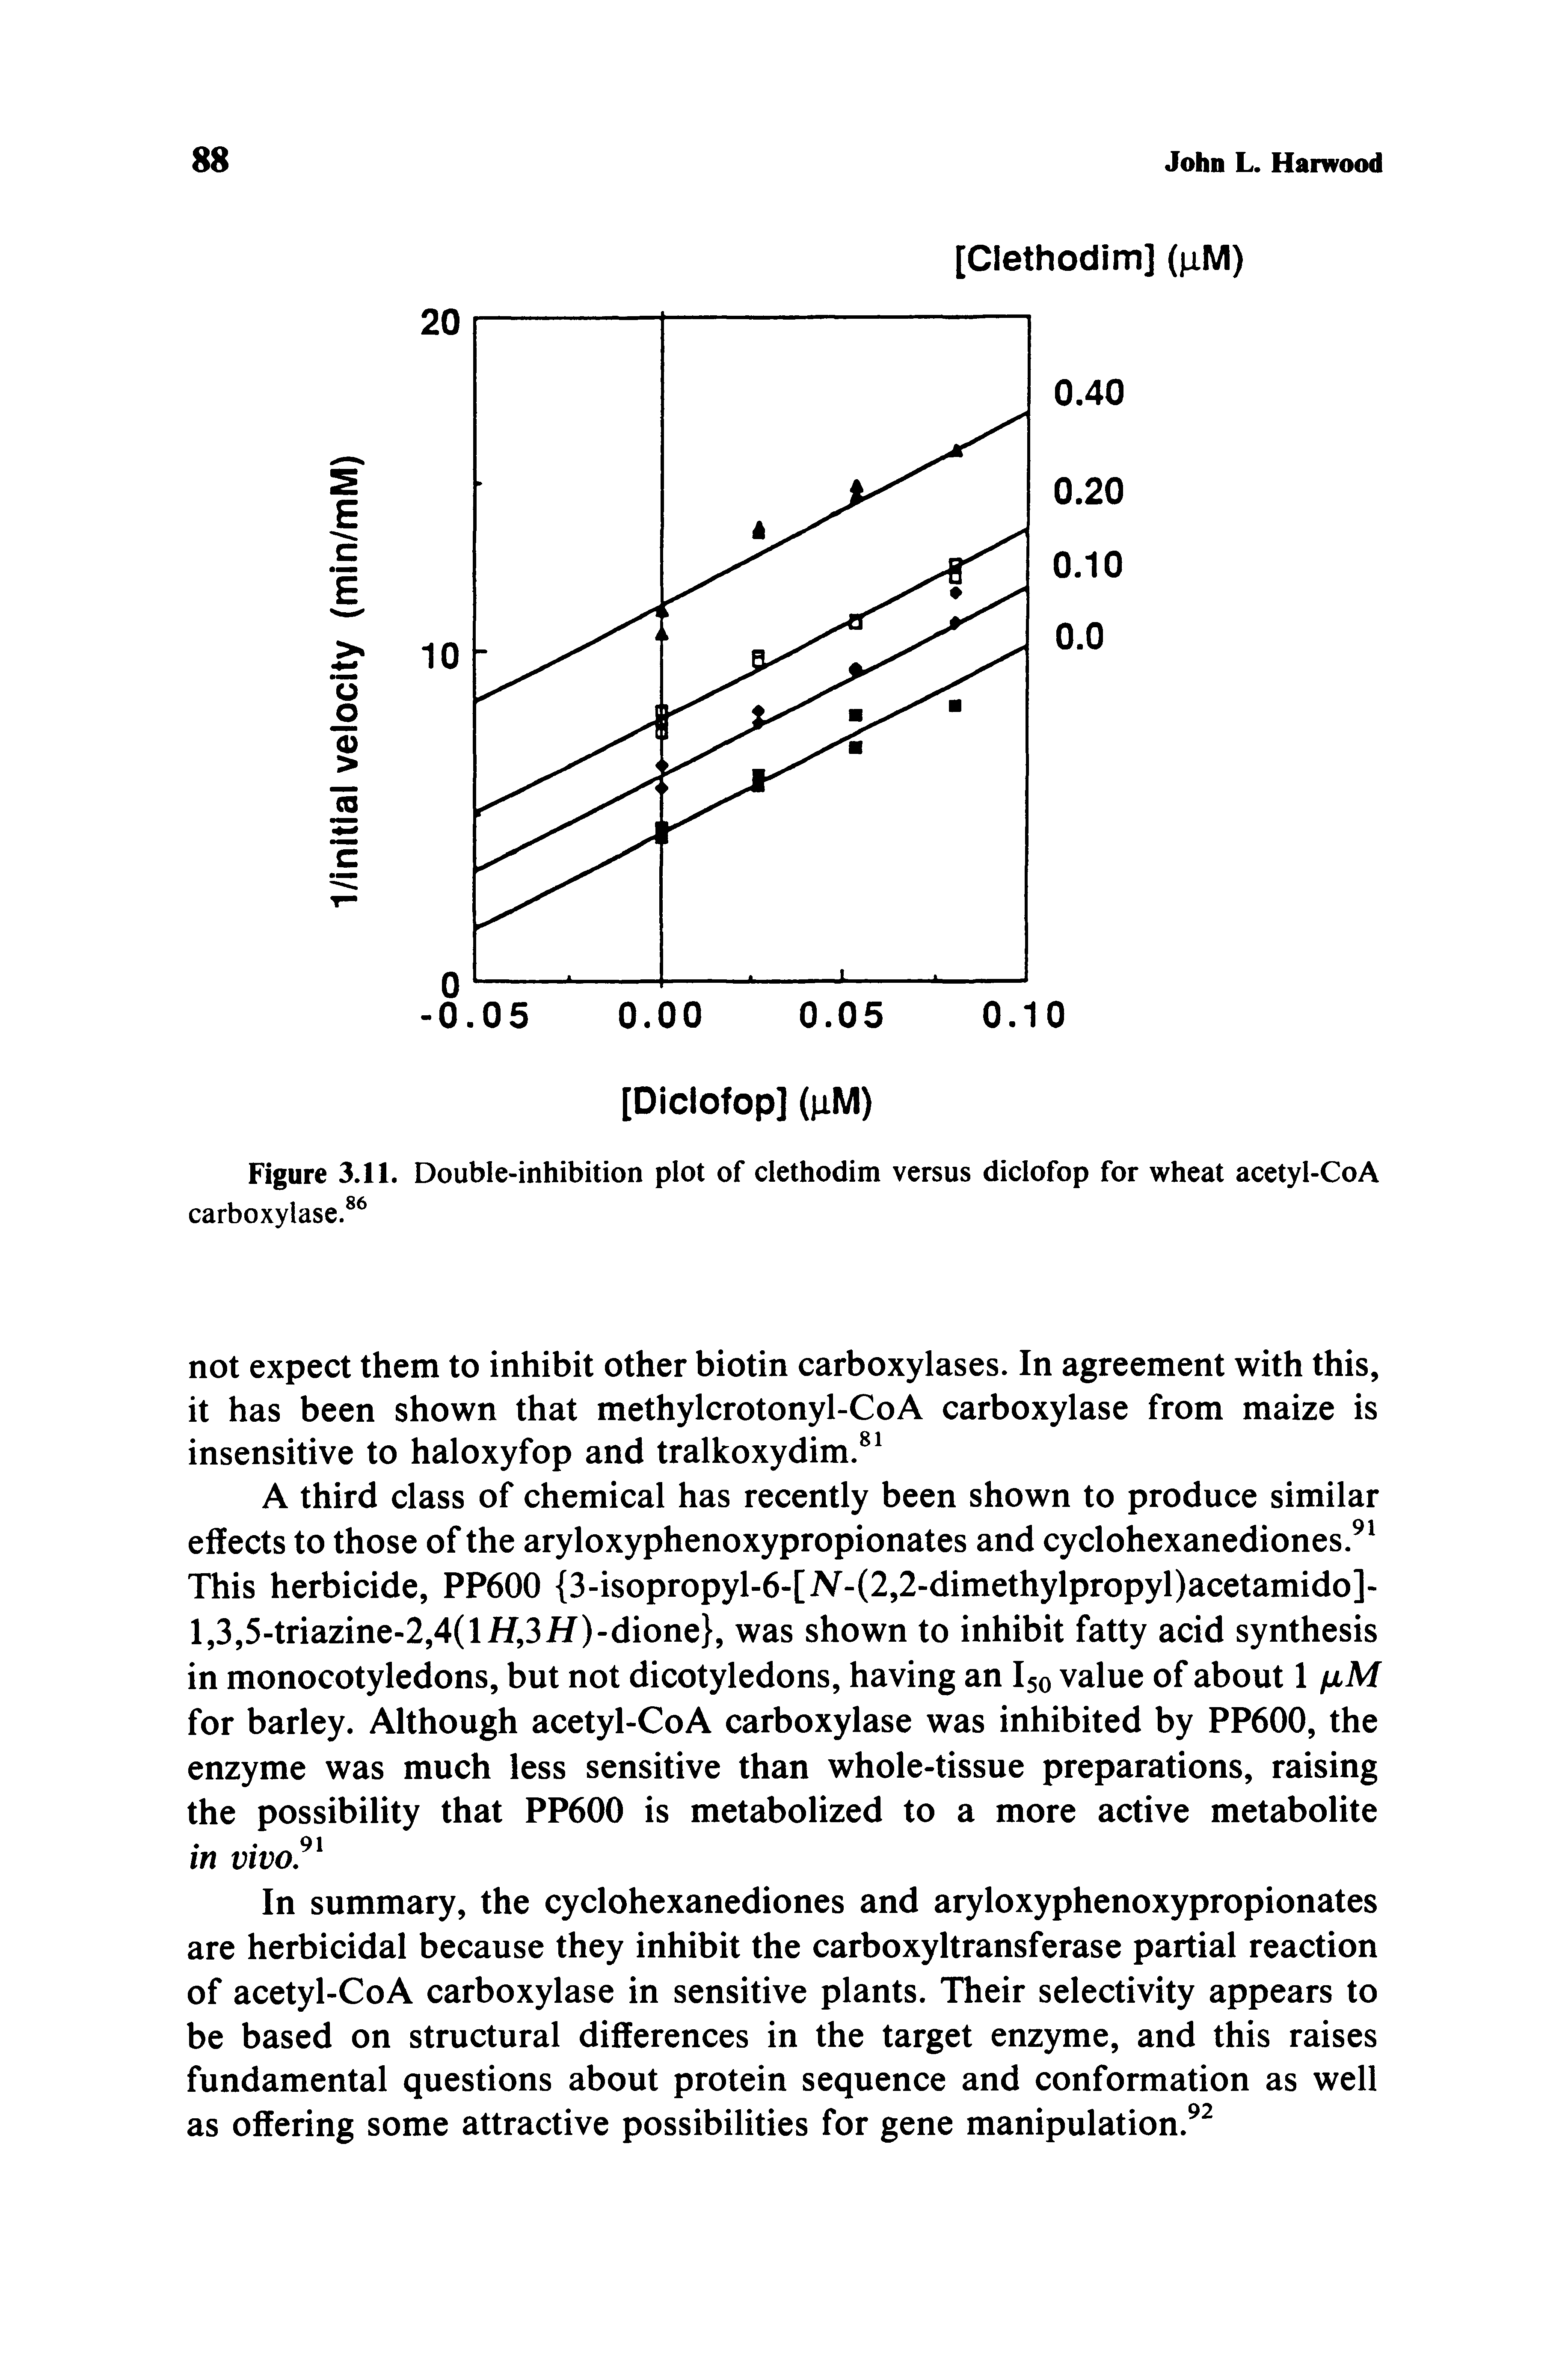 Figure 3.11. Double-inhibition plot of clethodim versus diclofop for wheat acetyl-CoA...